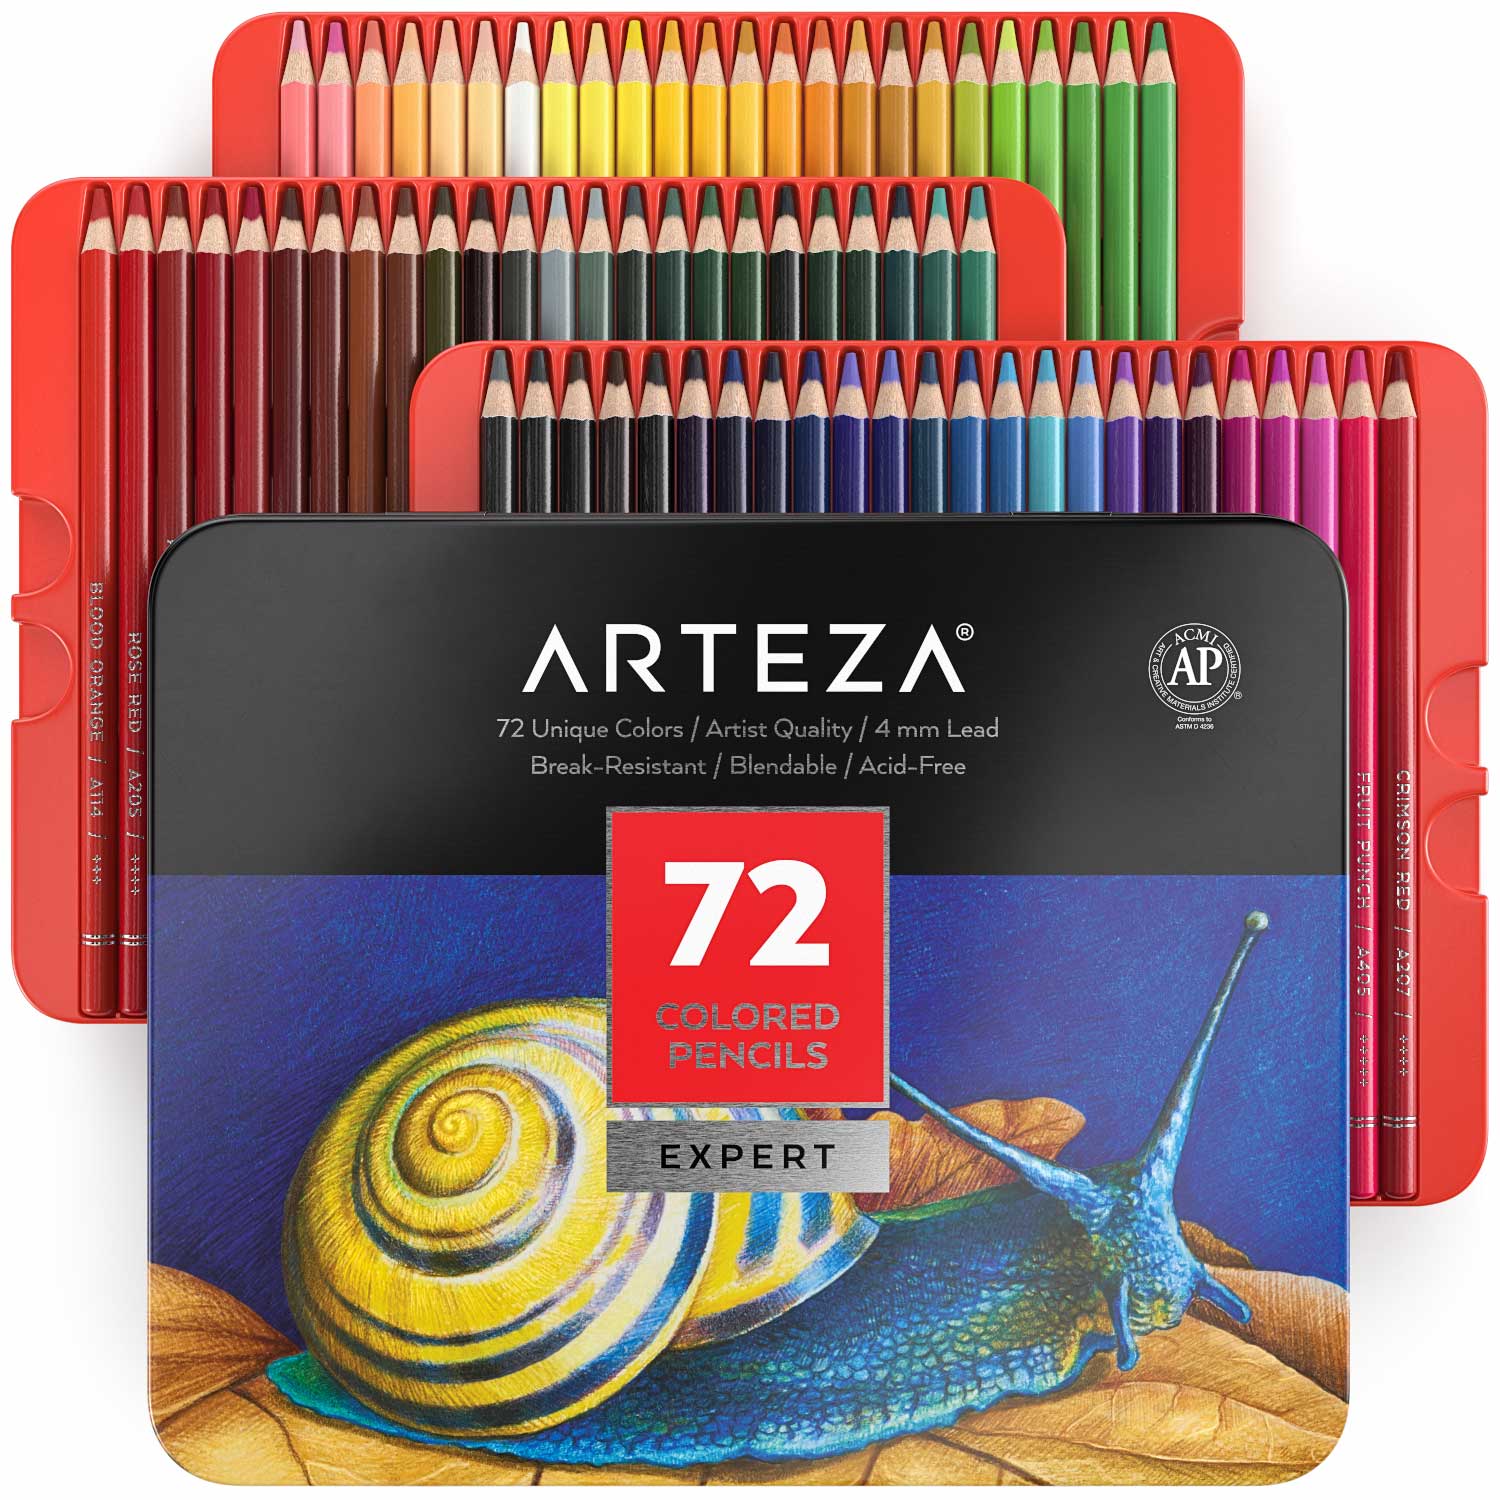 Professional Colored Pencils Set Of 72 Arteza Today we're reviewing the arteza colored pencils 72 count set! professional colored pencils set of 72